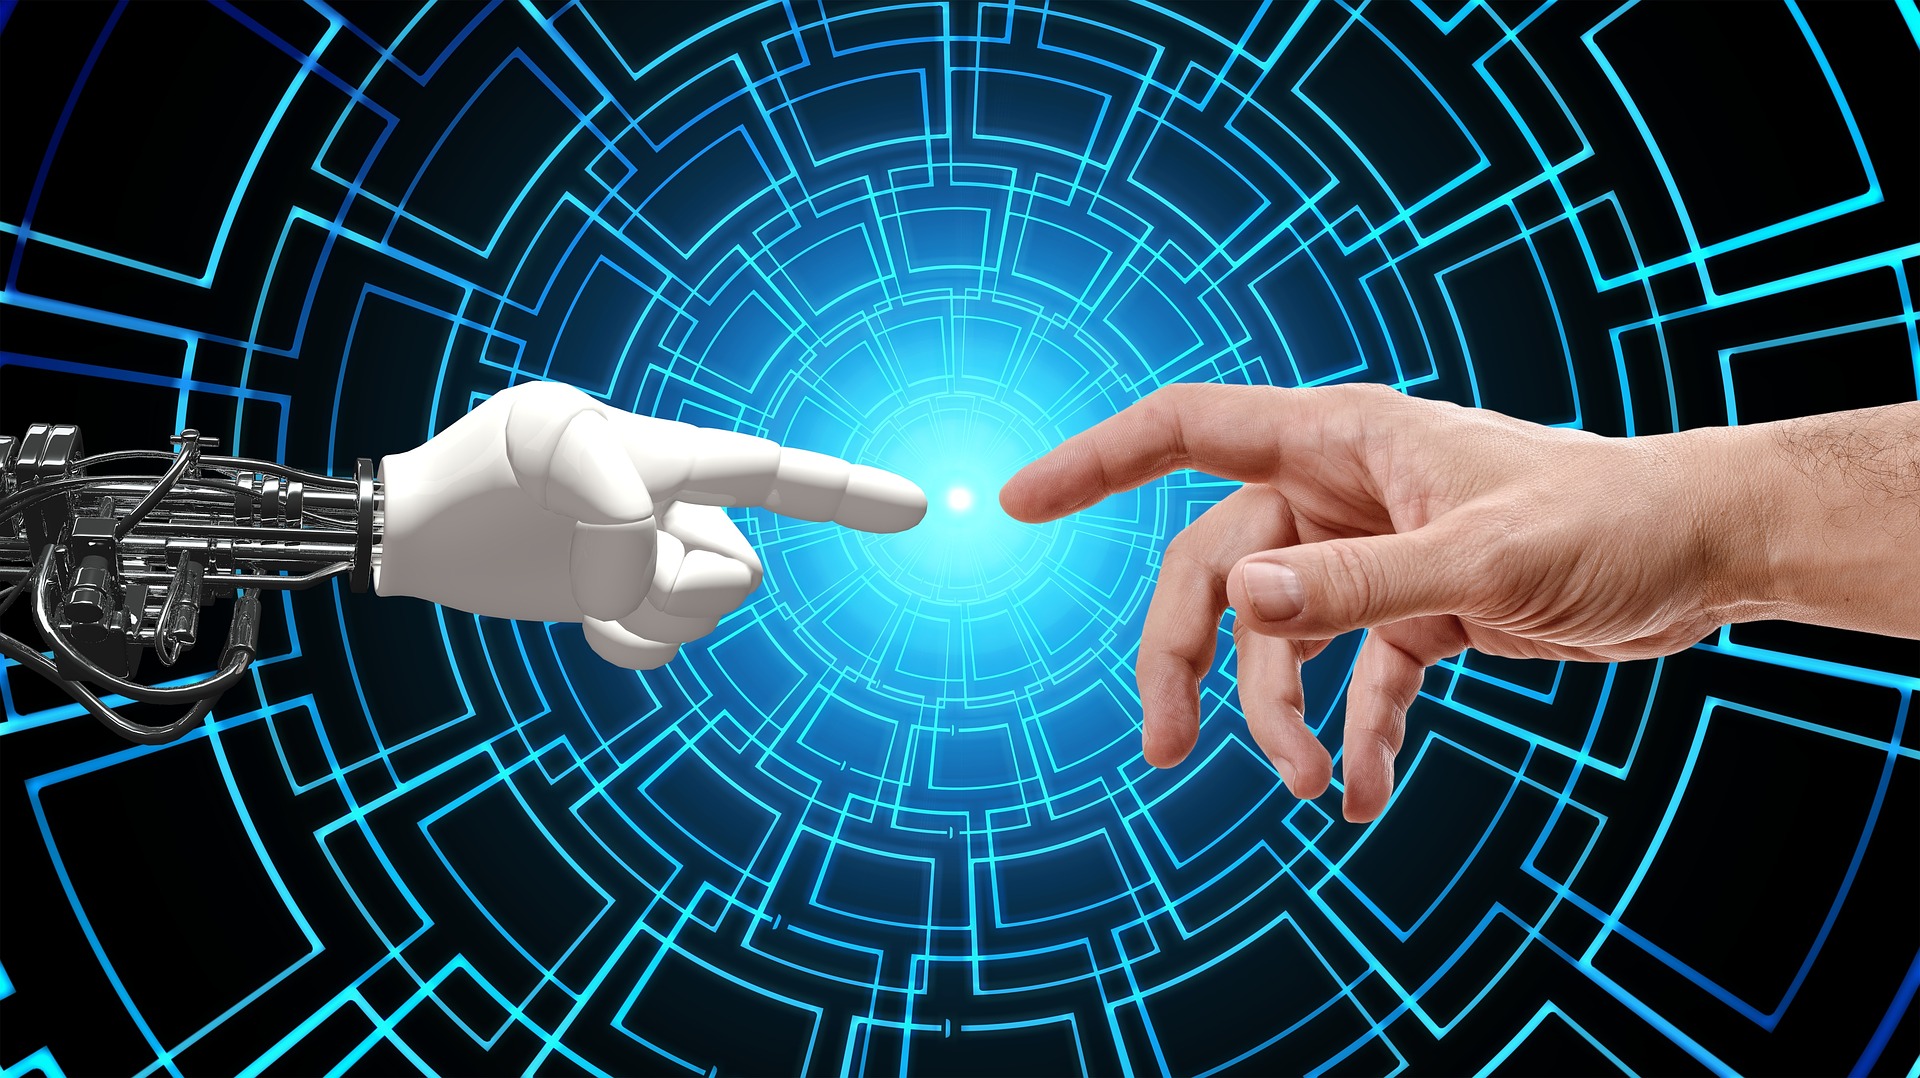 AI hand meeting human hand